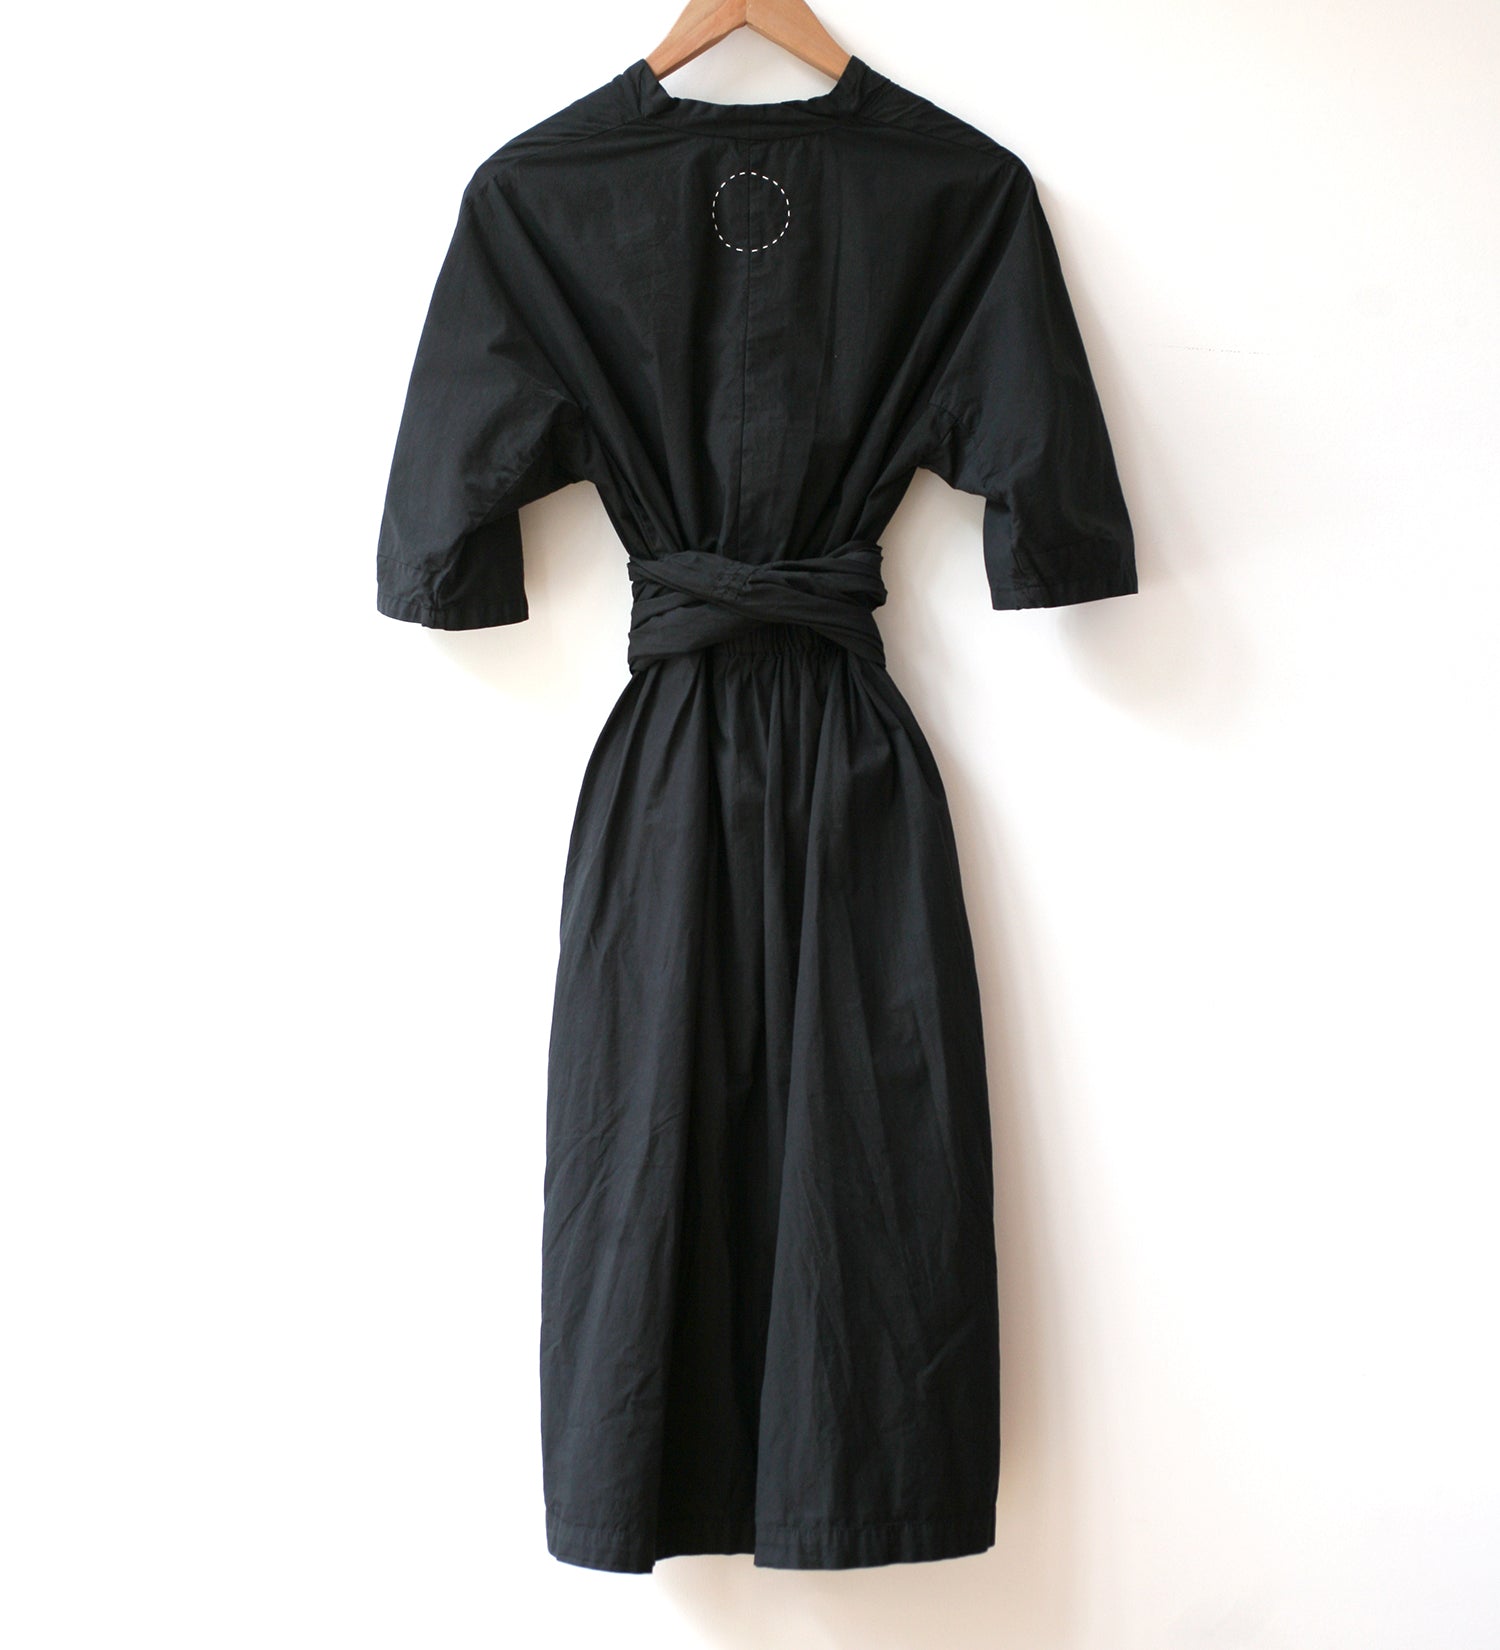 COSMICWONDER 定番Wrapped dress サイズ0 blackCOSMICWONDER